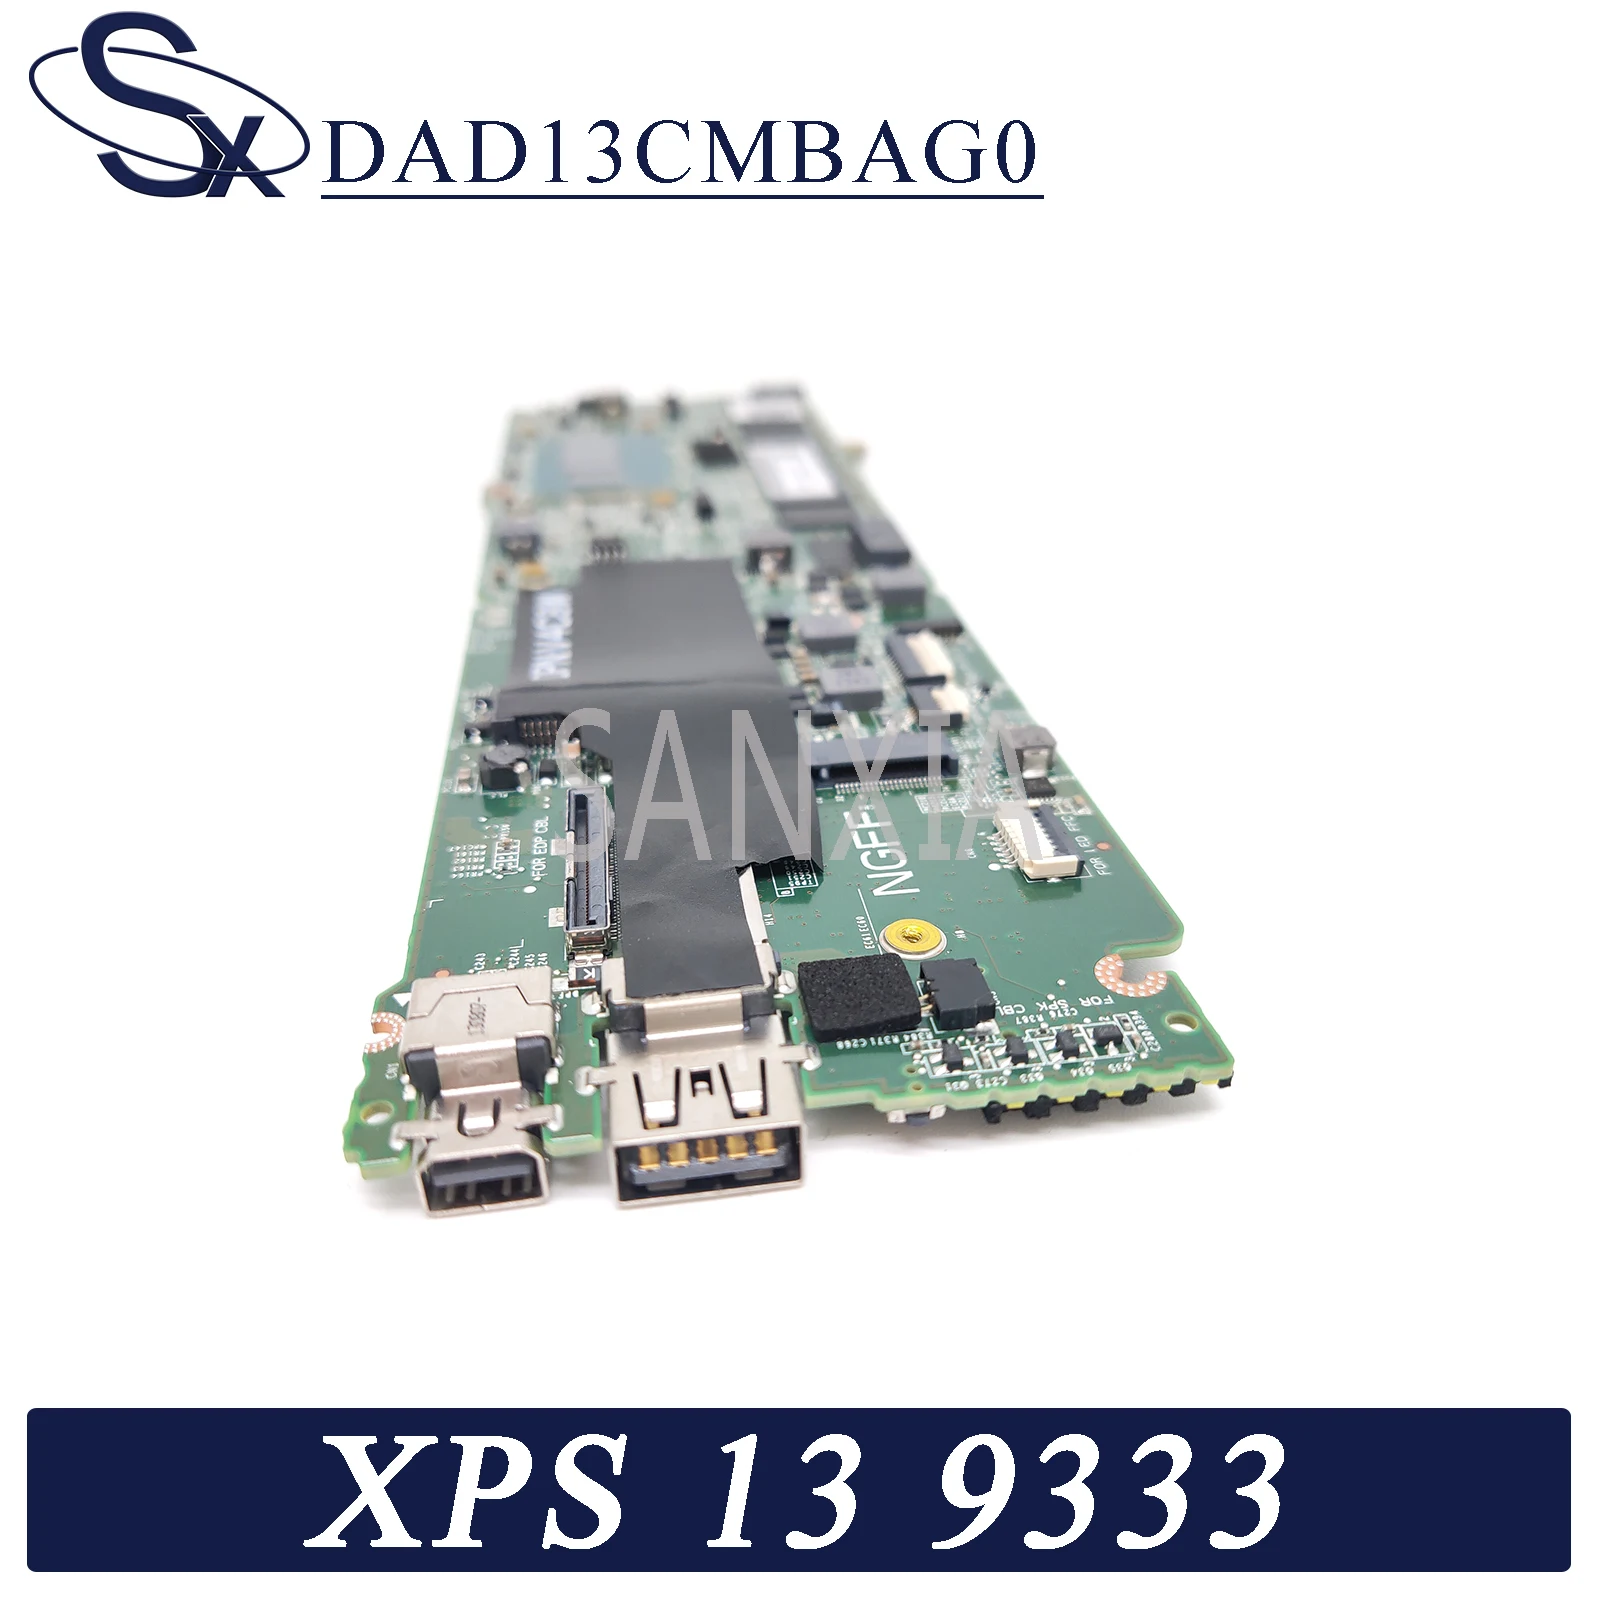 kefu dad13cmbag0 laptop motherboard for dell xps 13 9333 original mainboard 8gb ram i5 4200u free global shipping